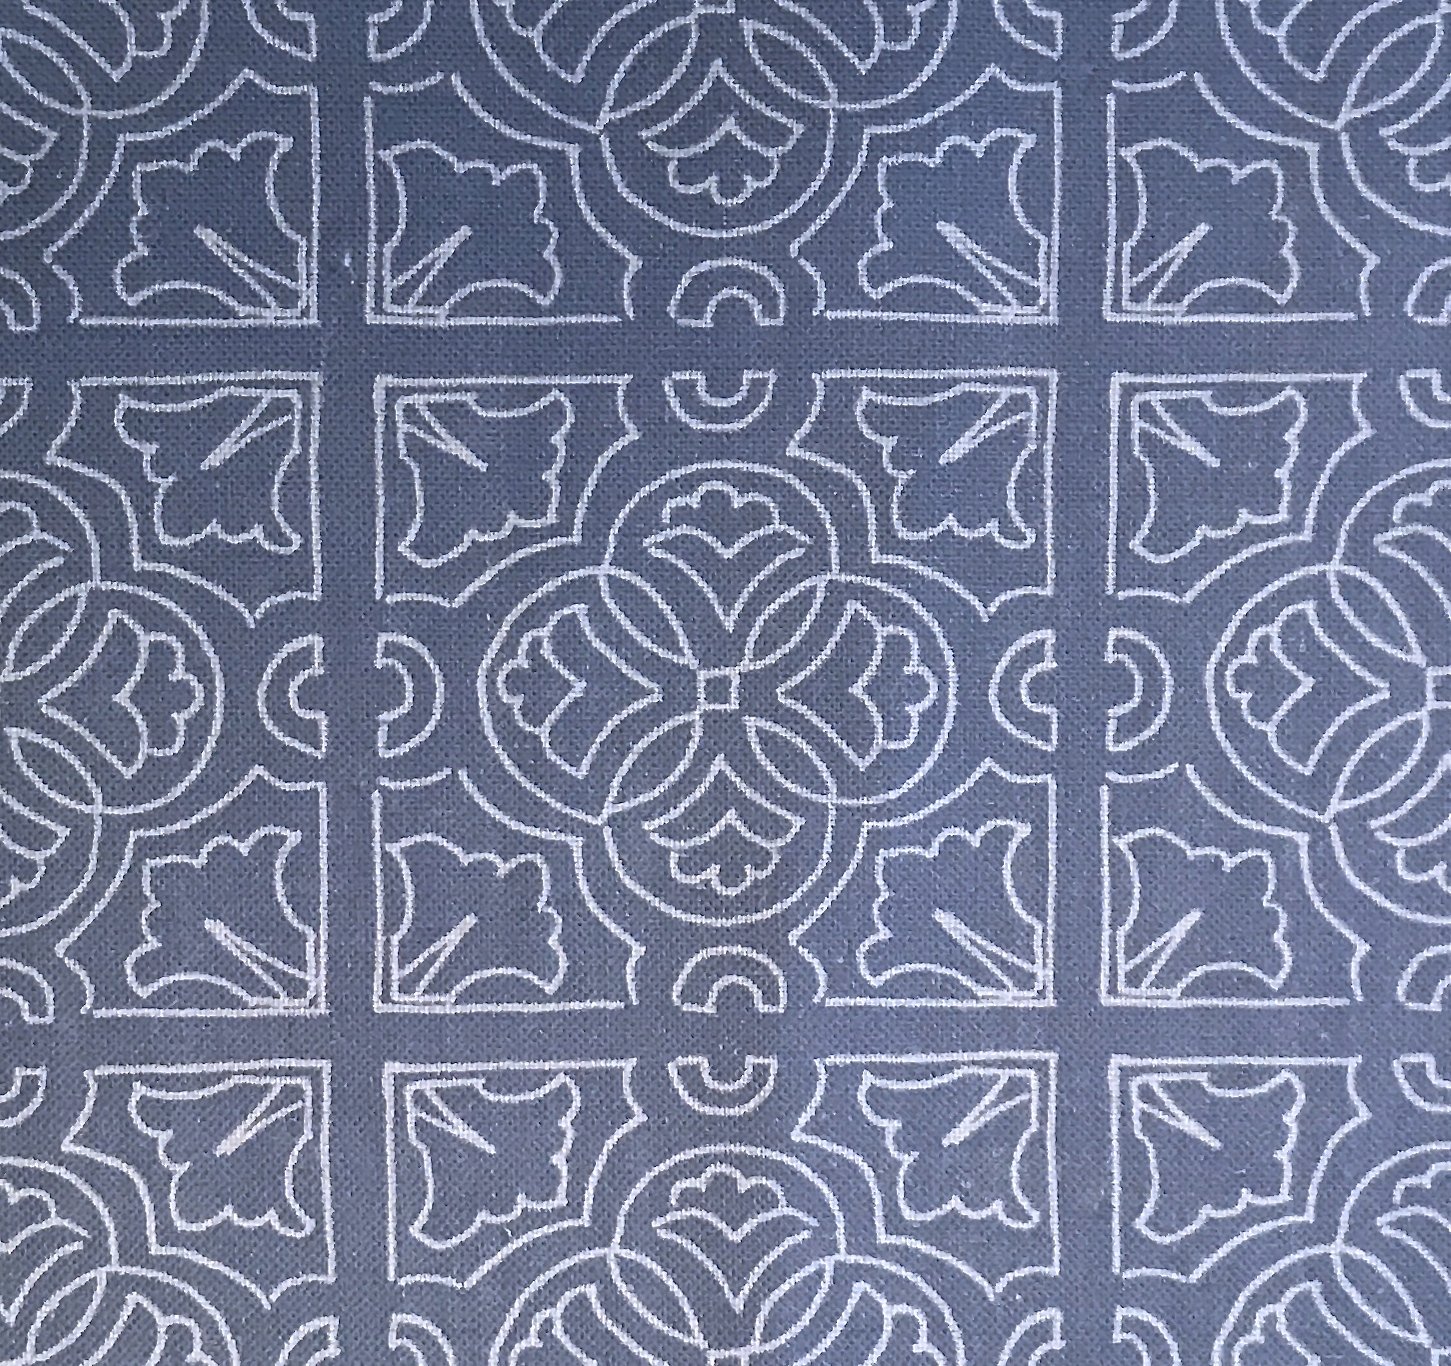 Irish Tile in wedgewood blue